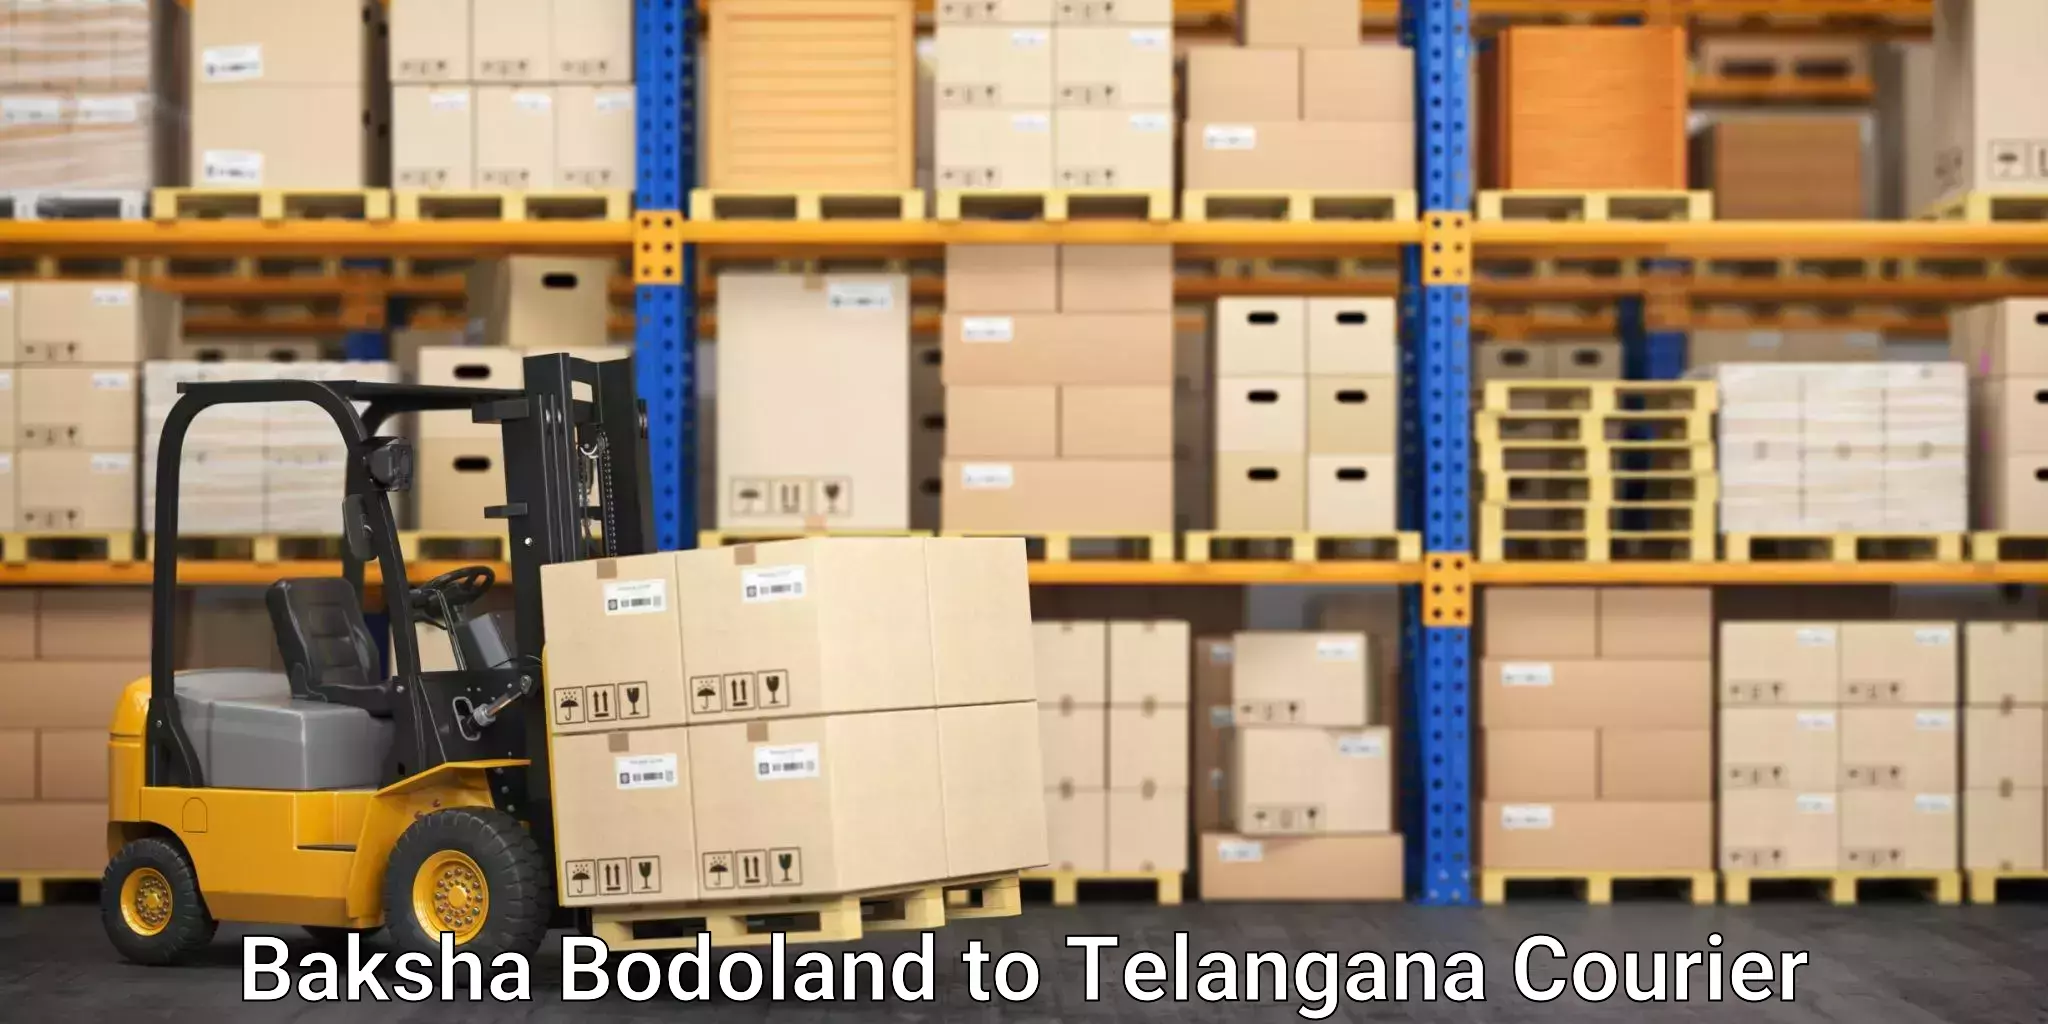 Global logistics network Baksha Bodoland to Mudigonda